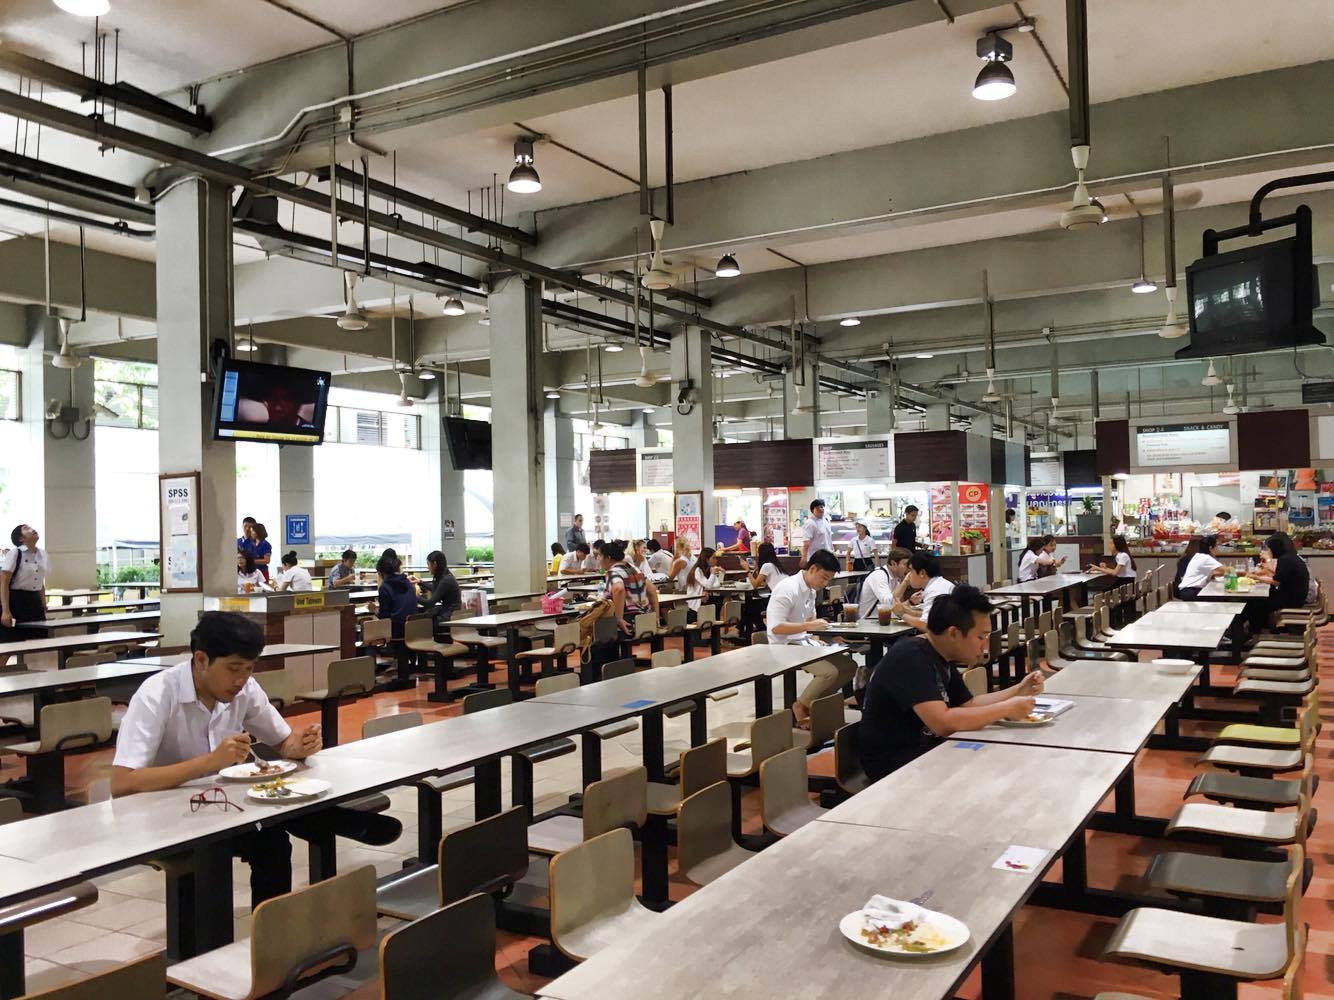 Bangkok university food court